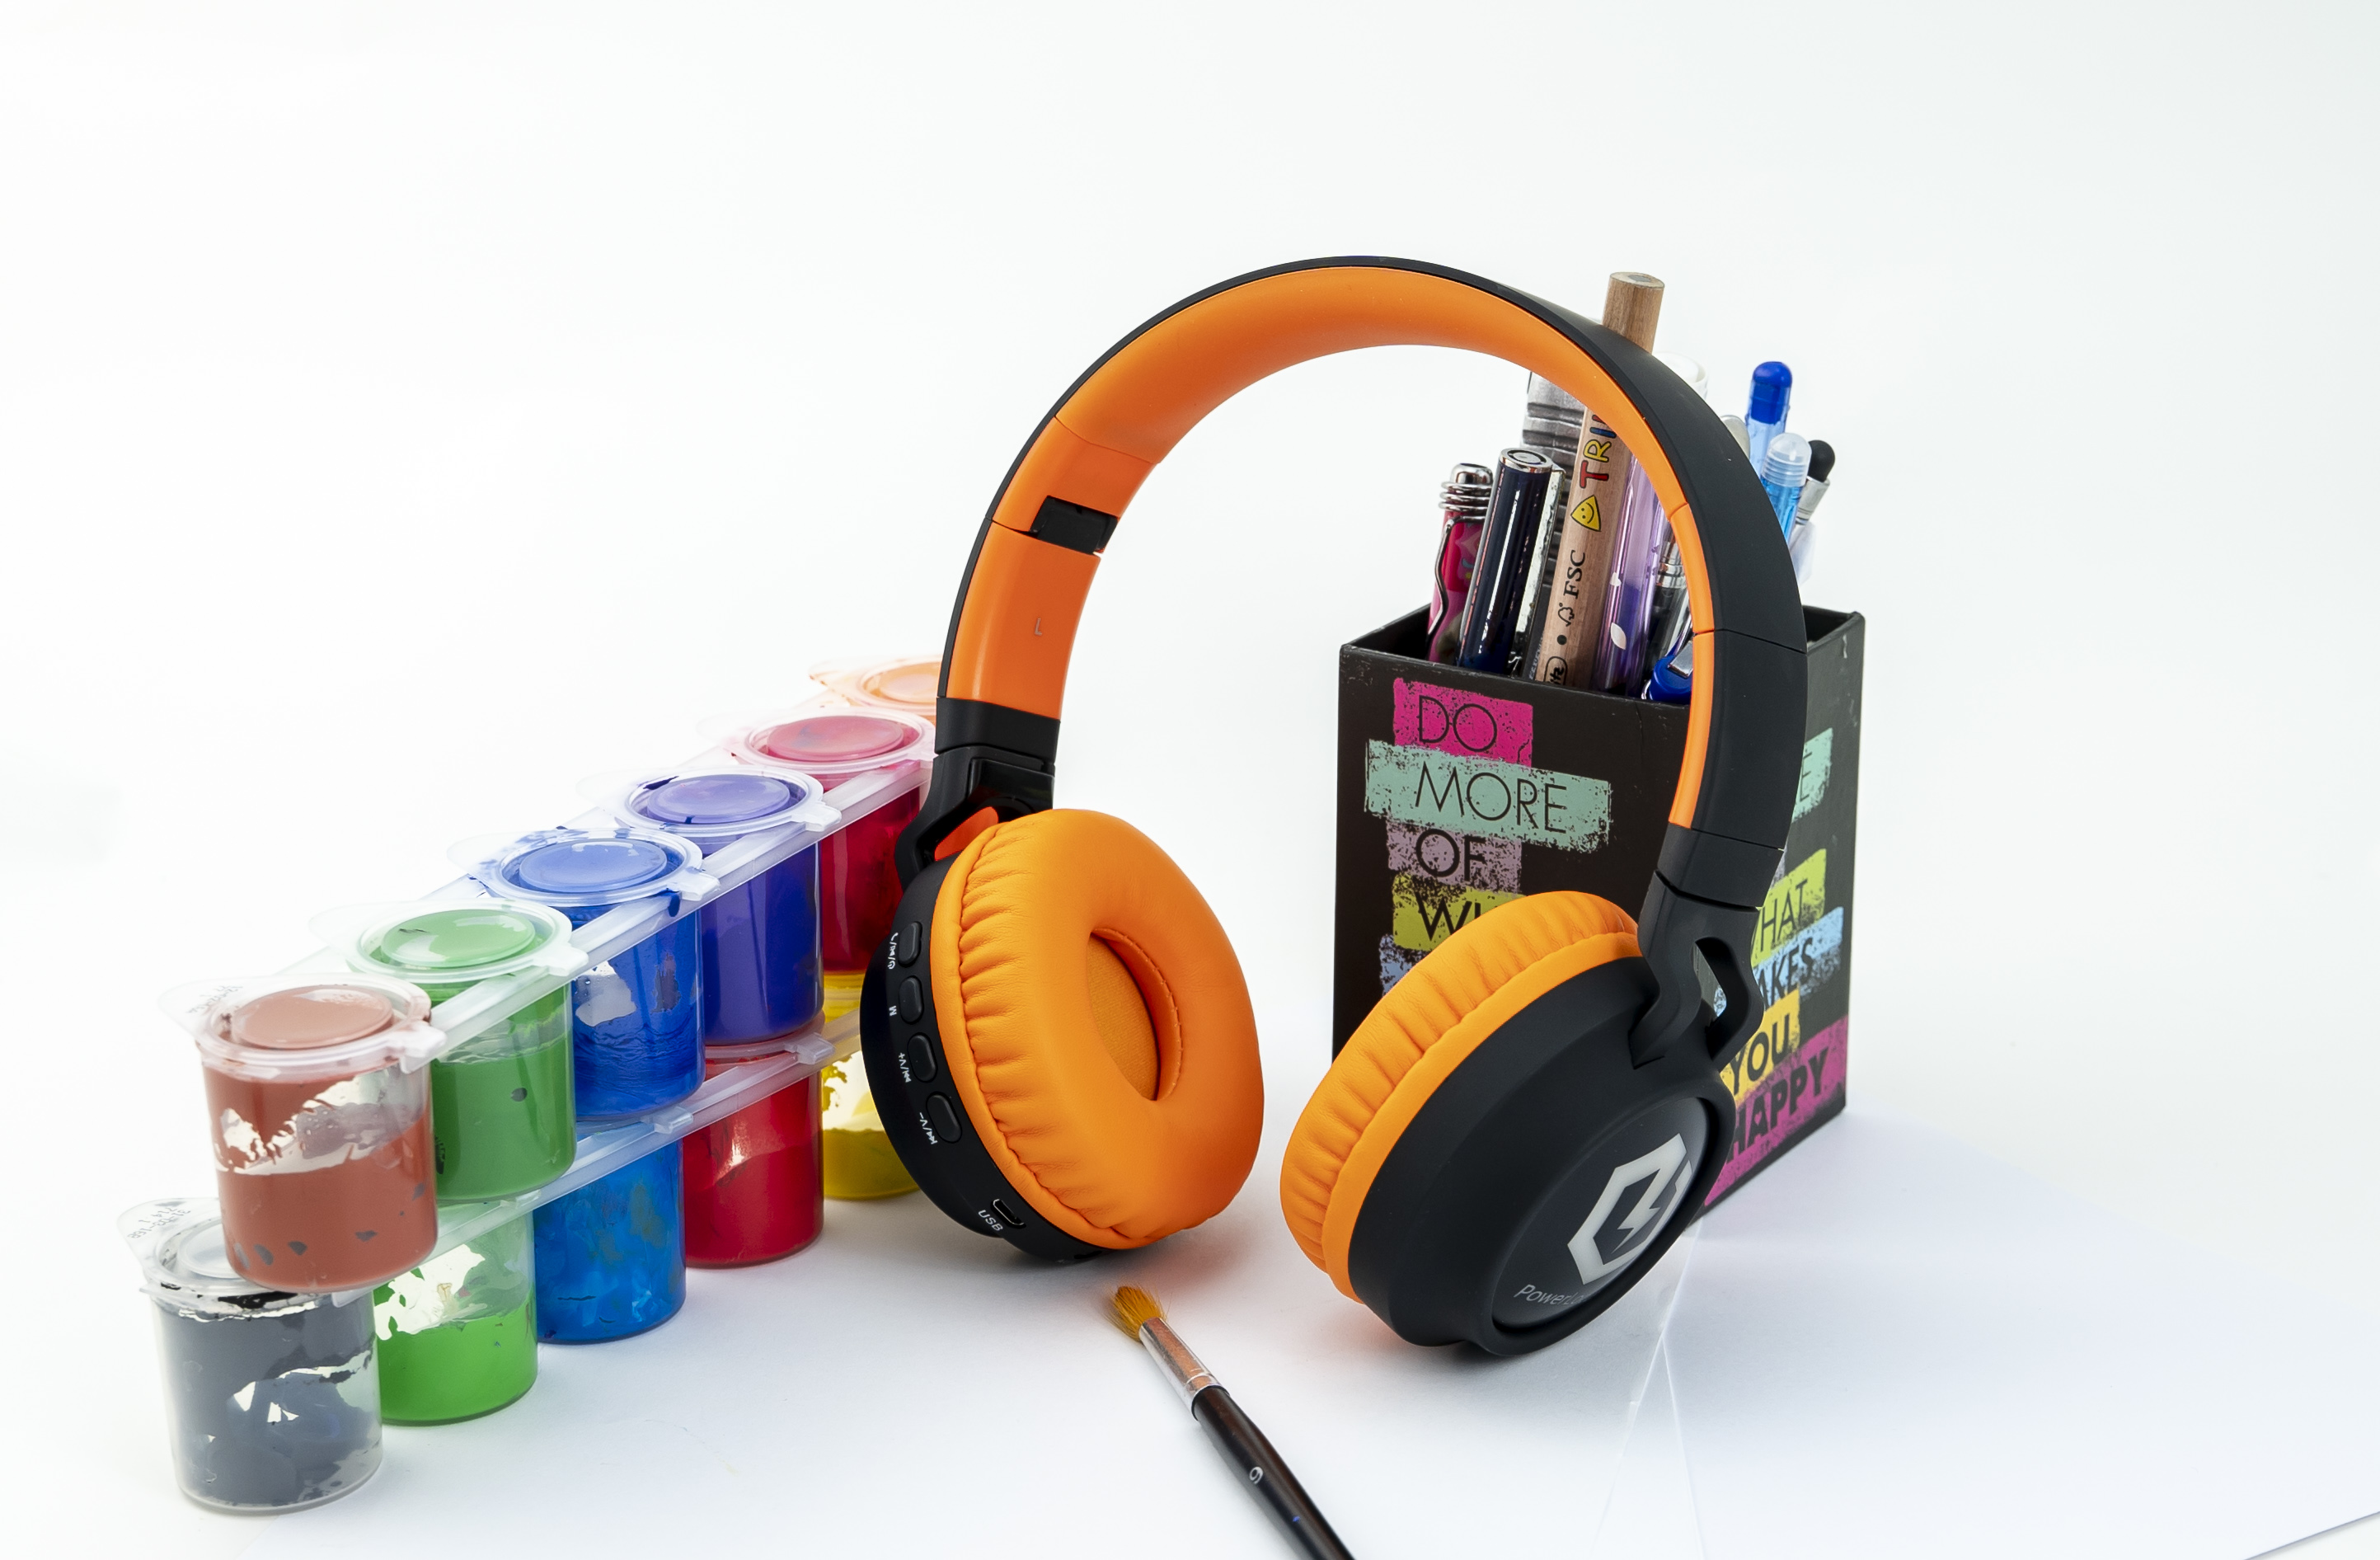 Buddy POWERLOCUS für Kopfhörer Orange Kinder, Over-ear